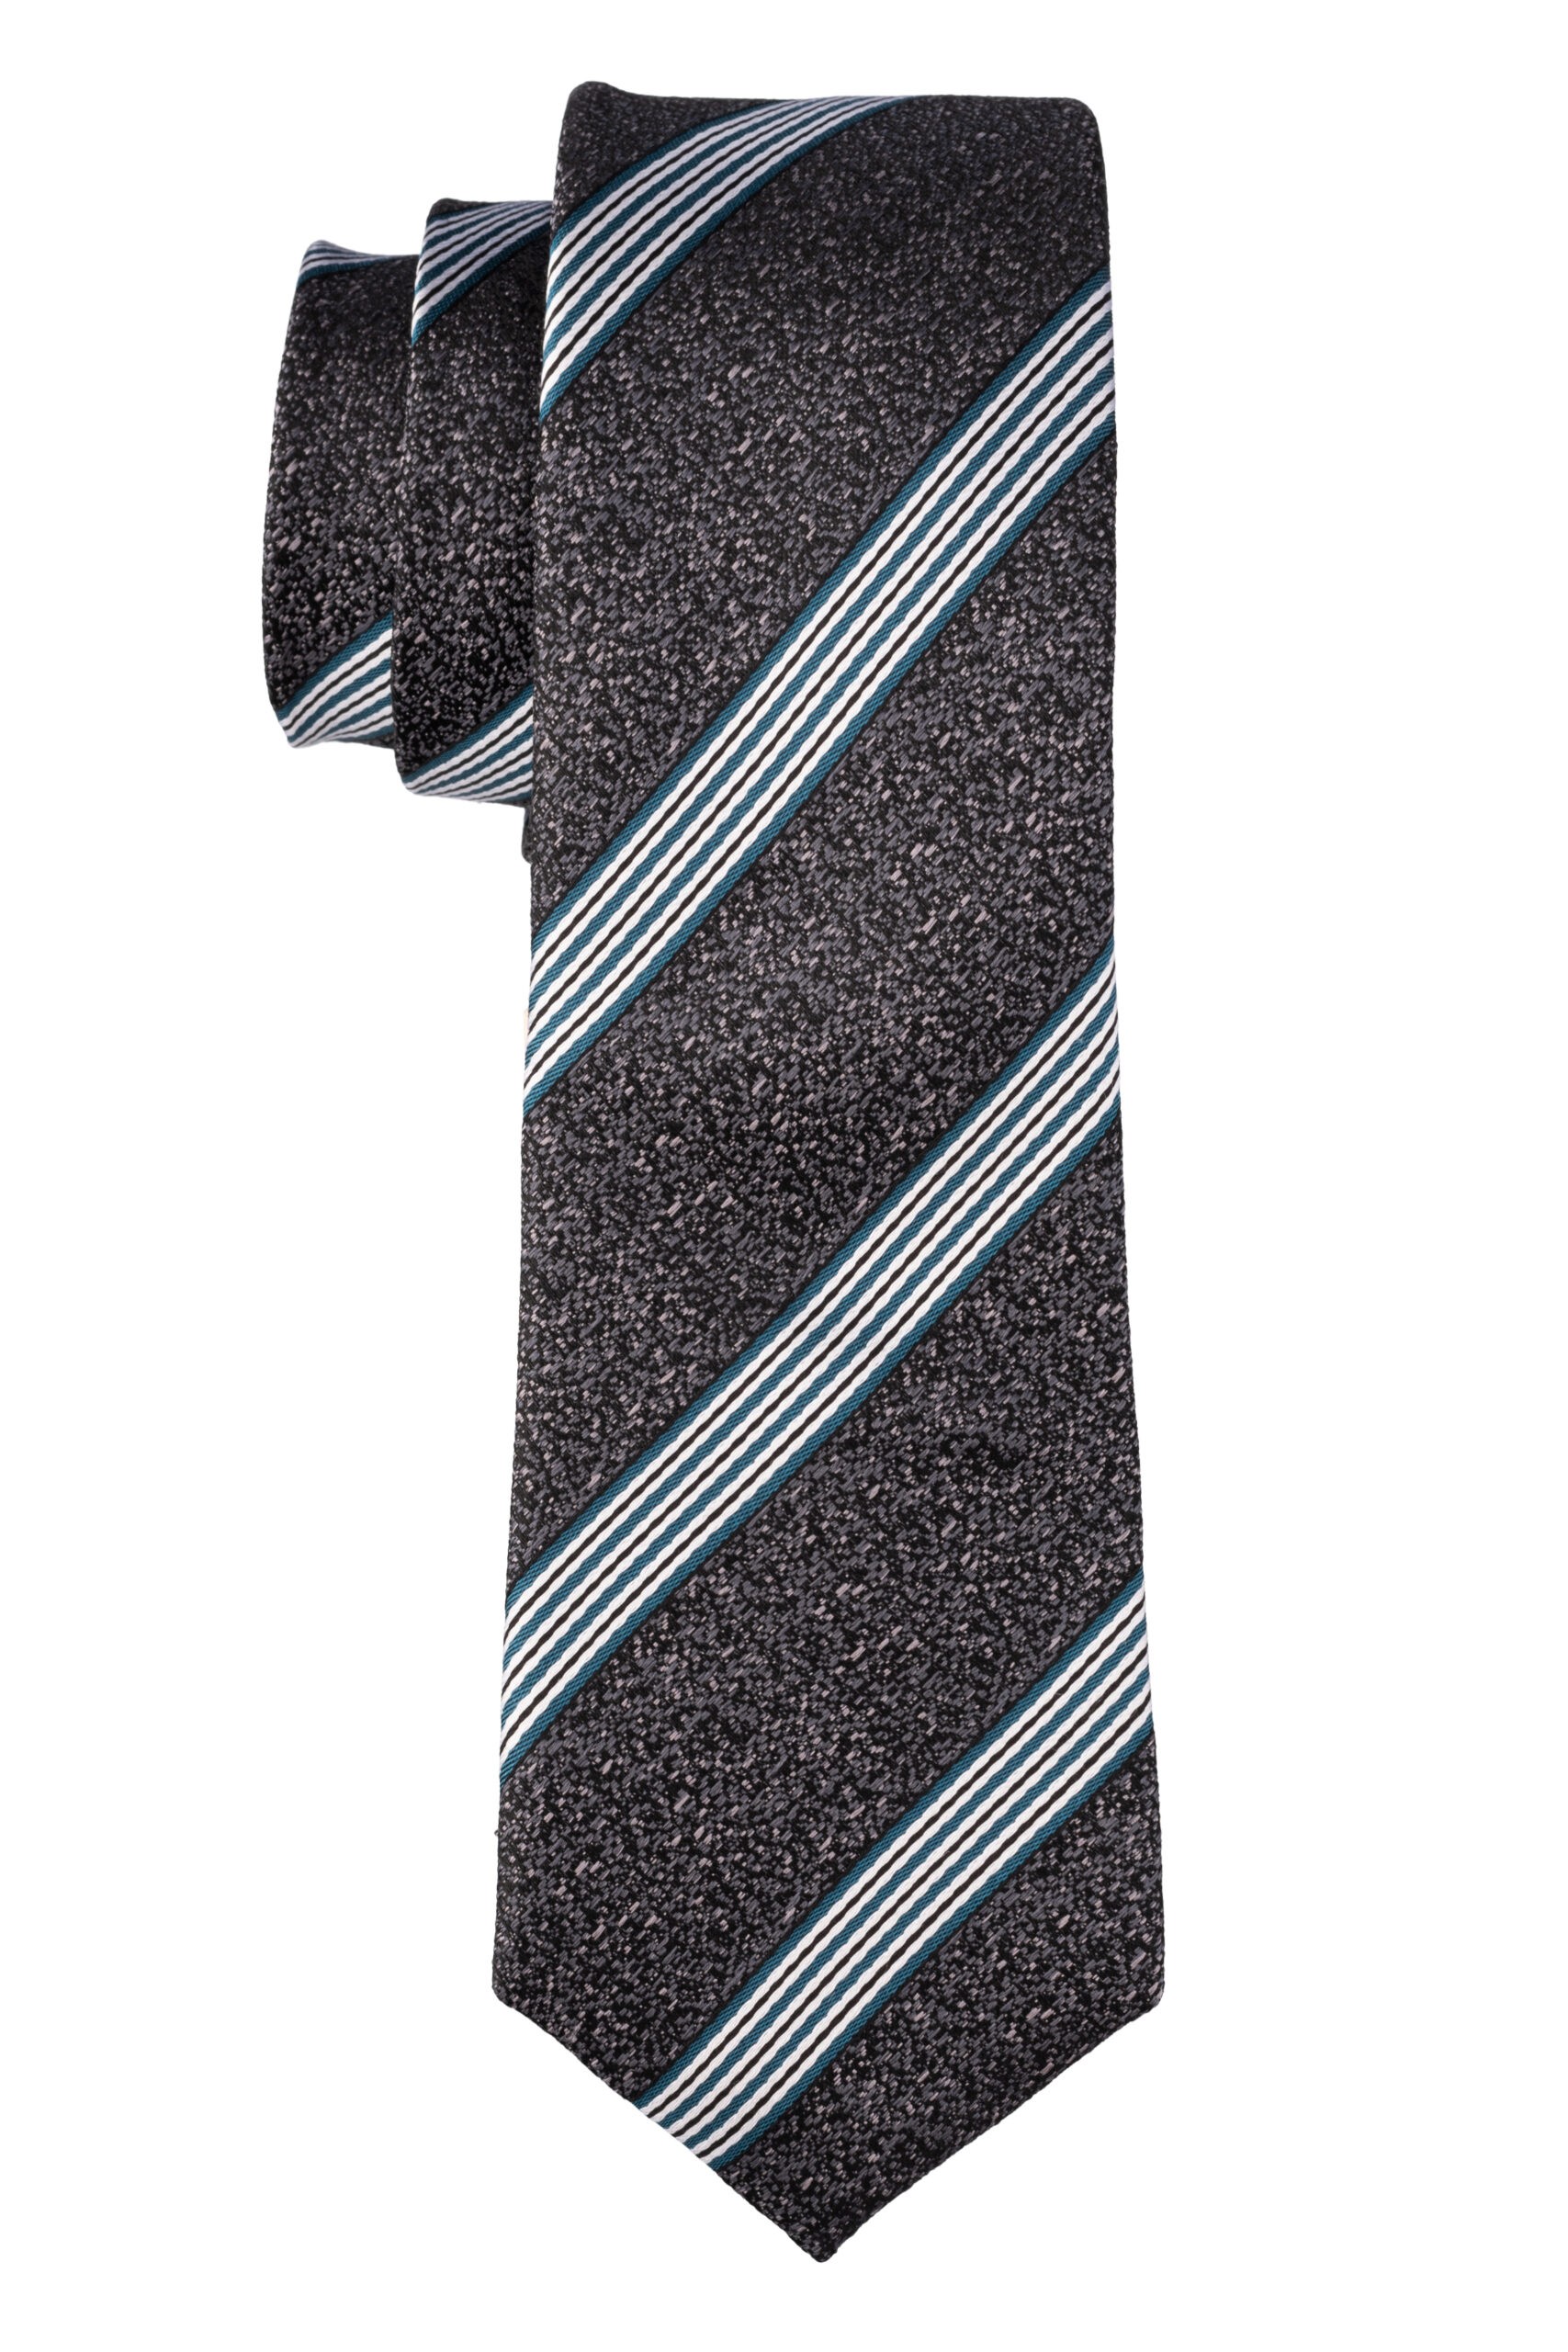 Grey and white Necktie-TI 2037- Striped (Tie: 17; Neck: adjustable